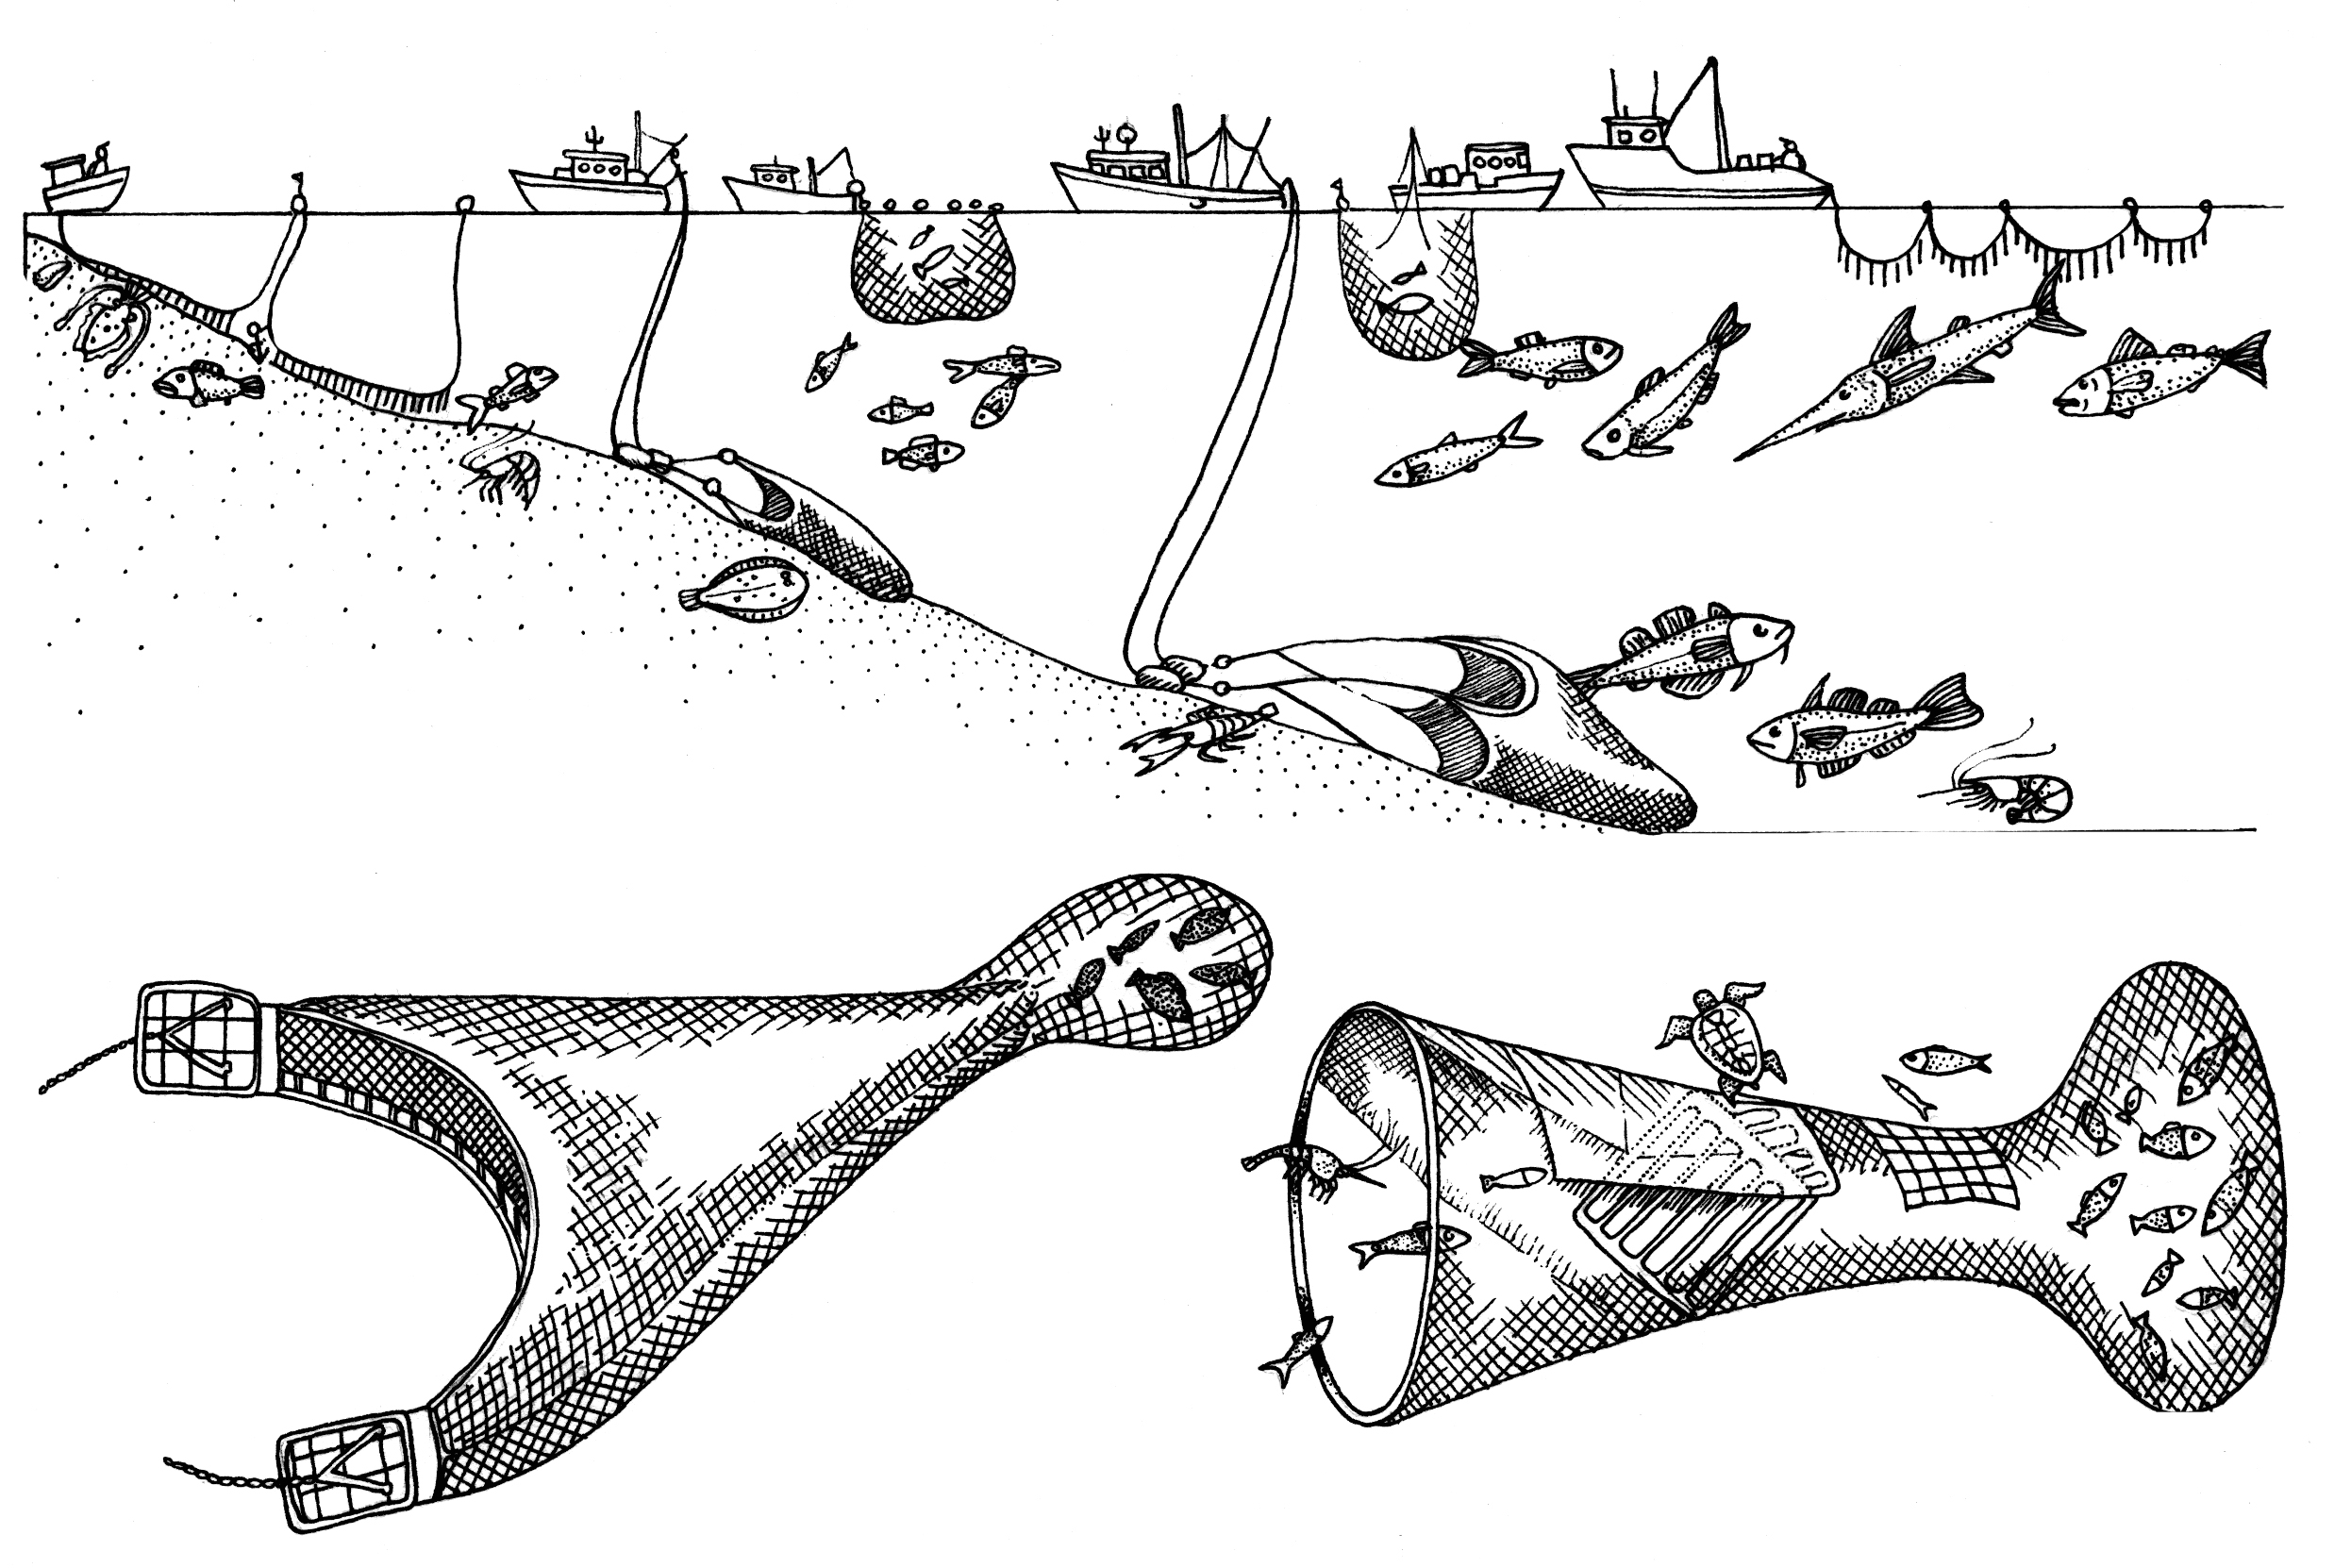 Diagram of fishing methods - Lizzie Harper